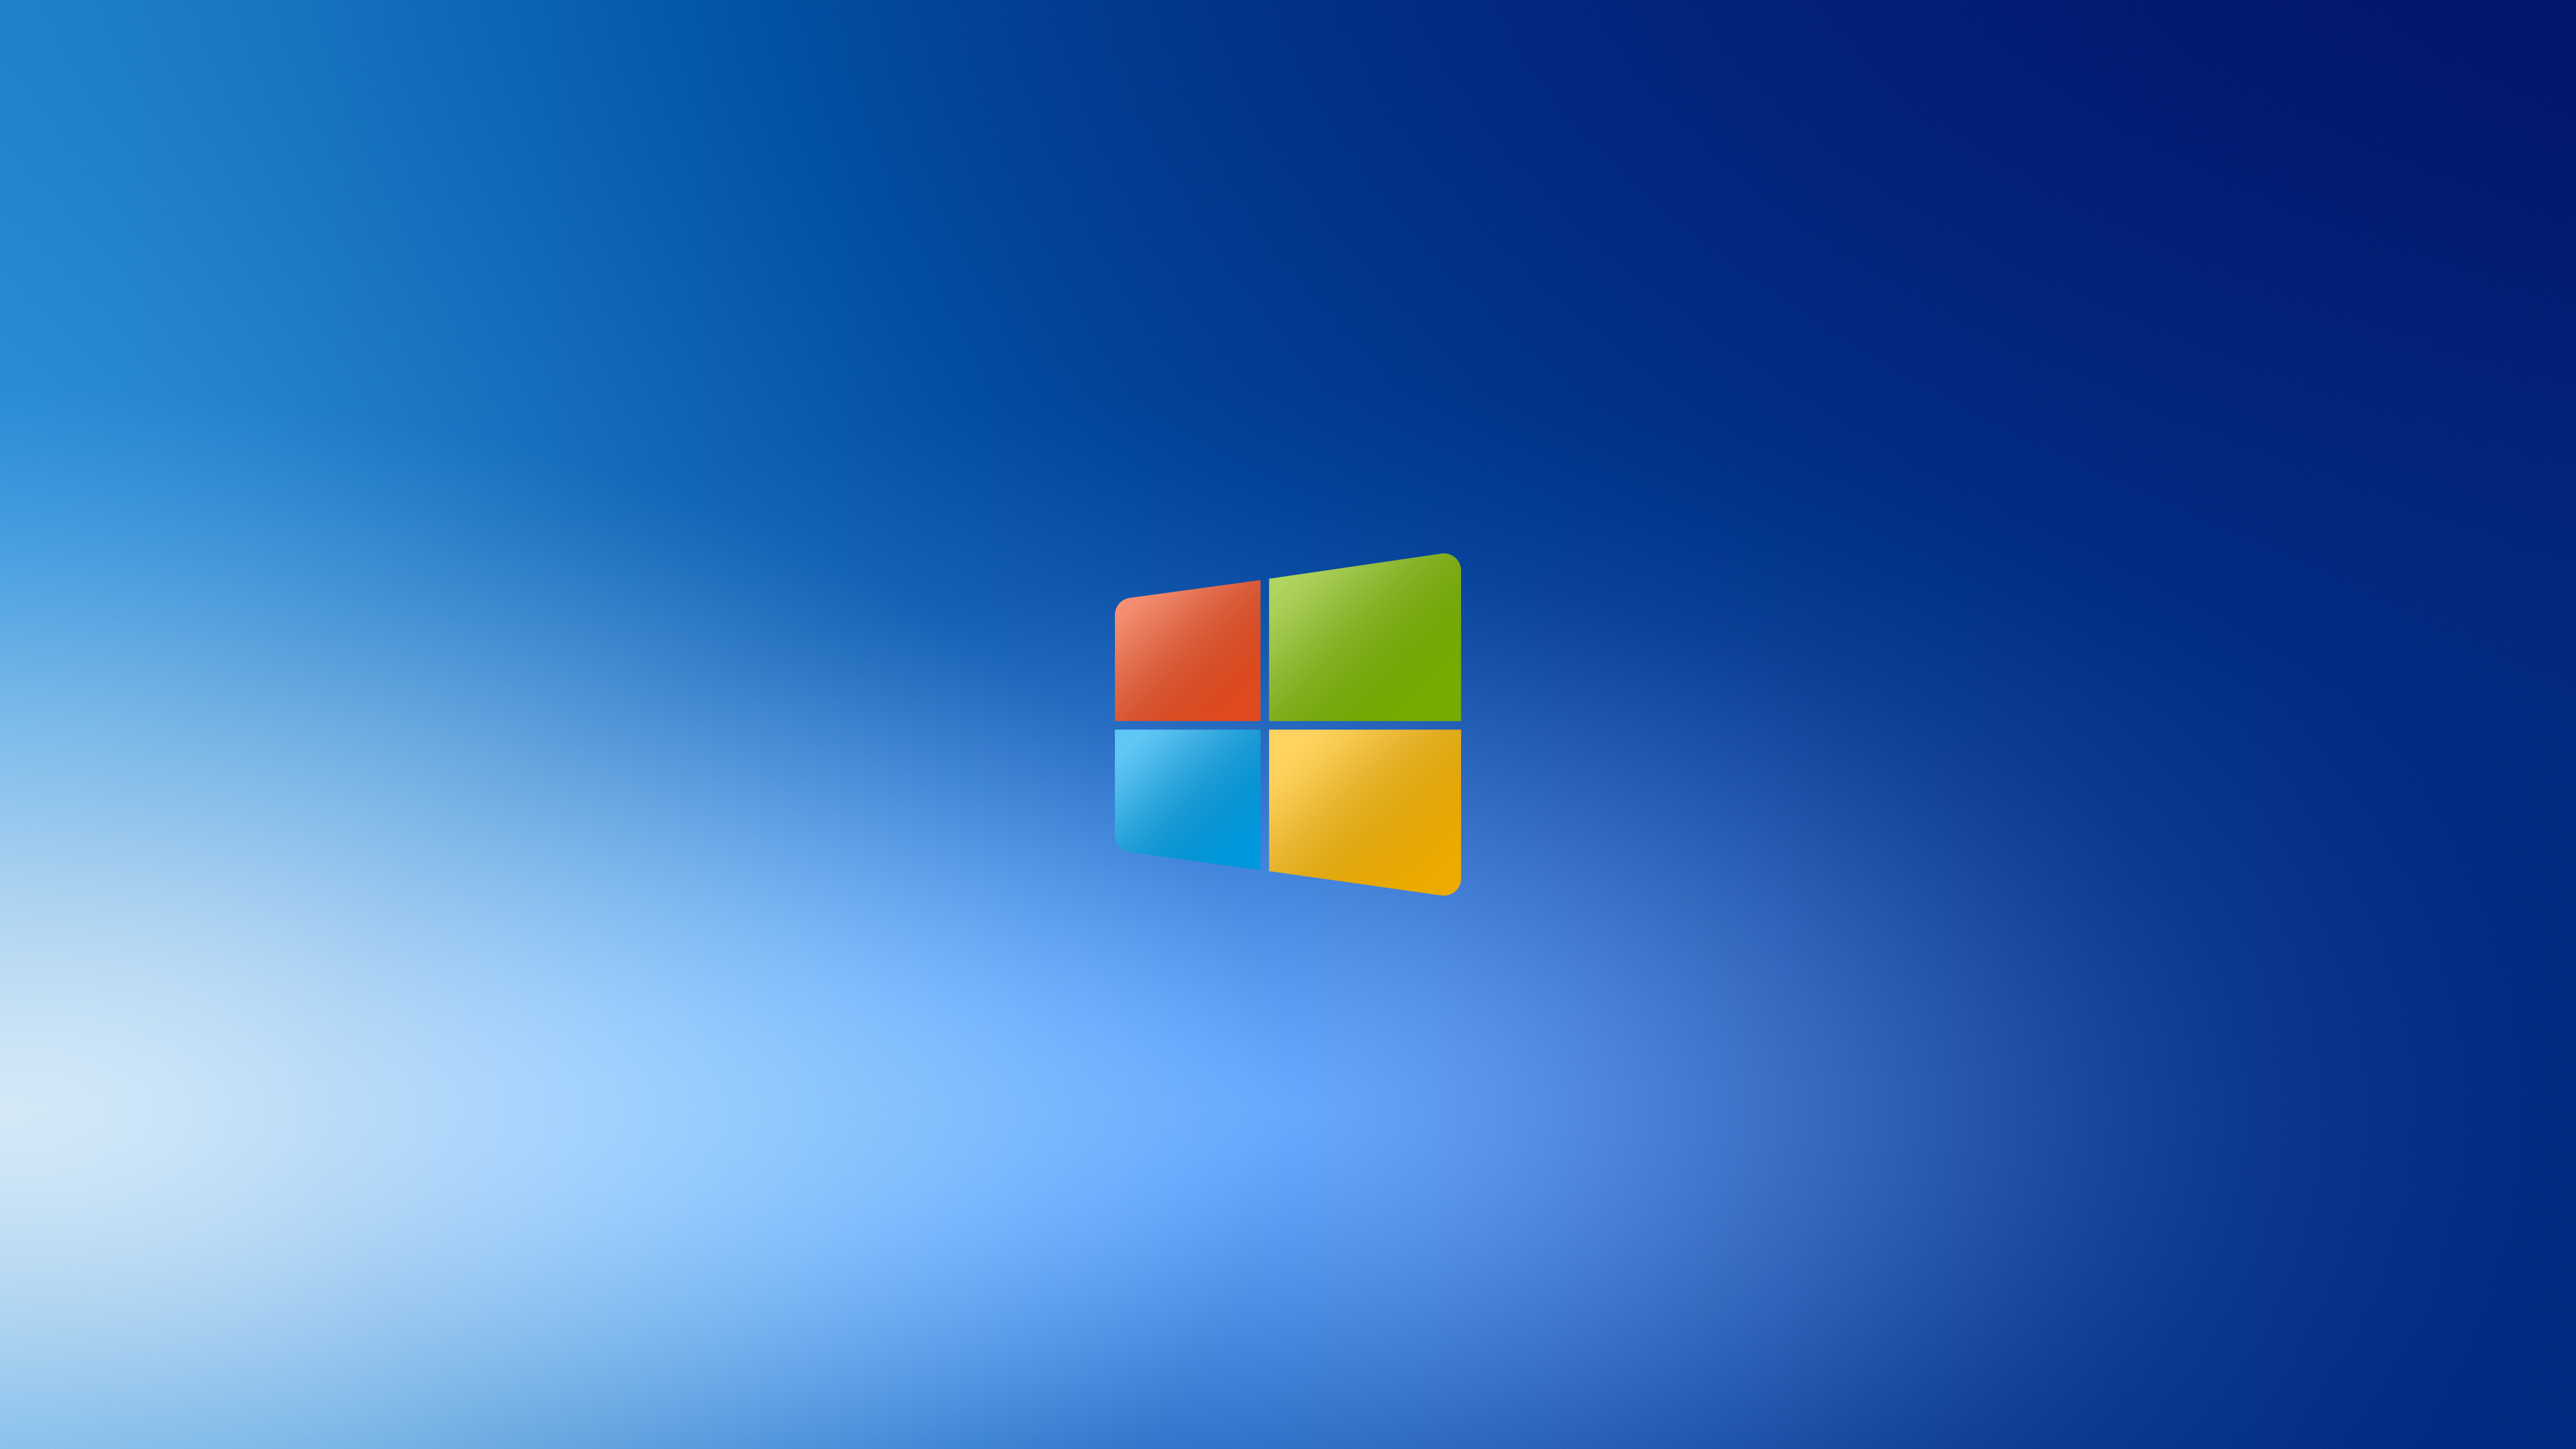 Windows 10X wallpaper [DOWNLOAD FREE]